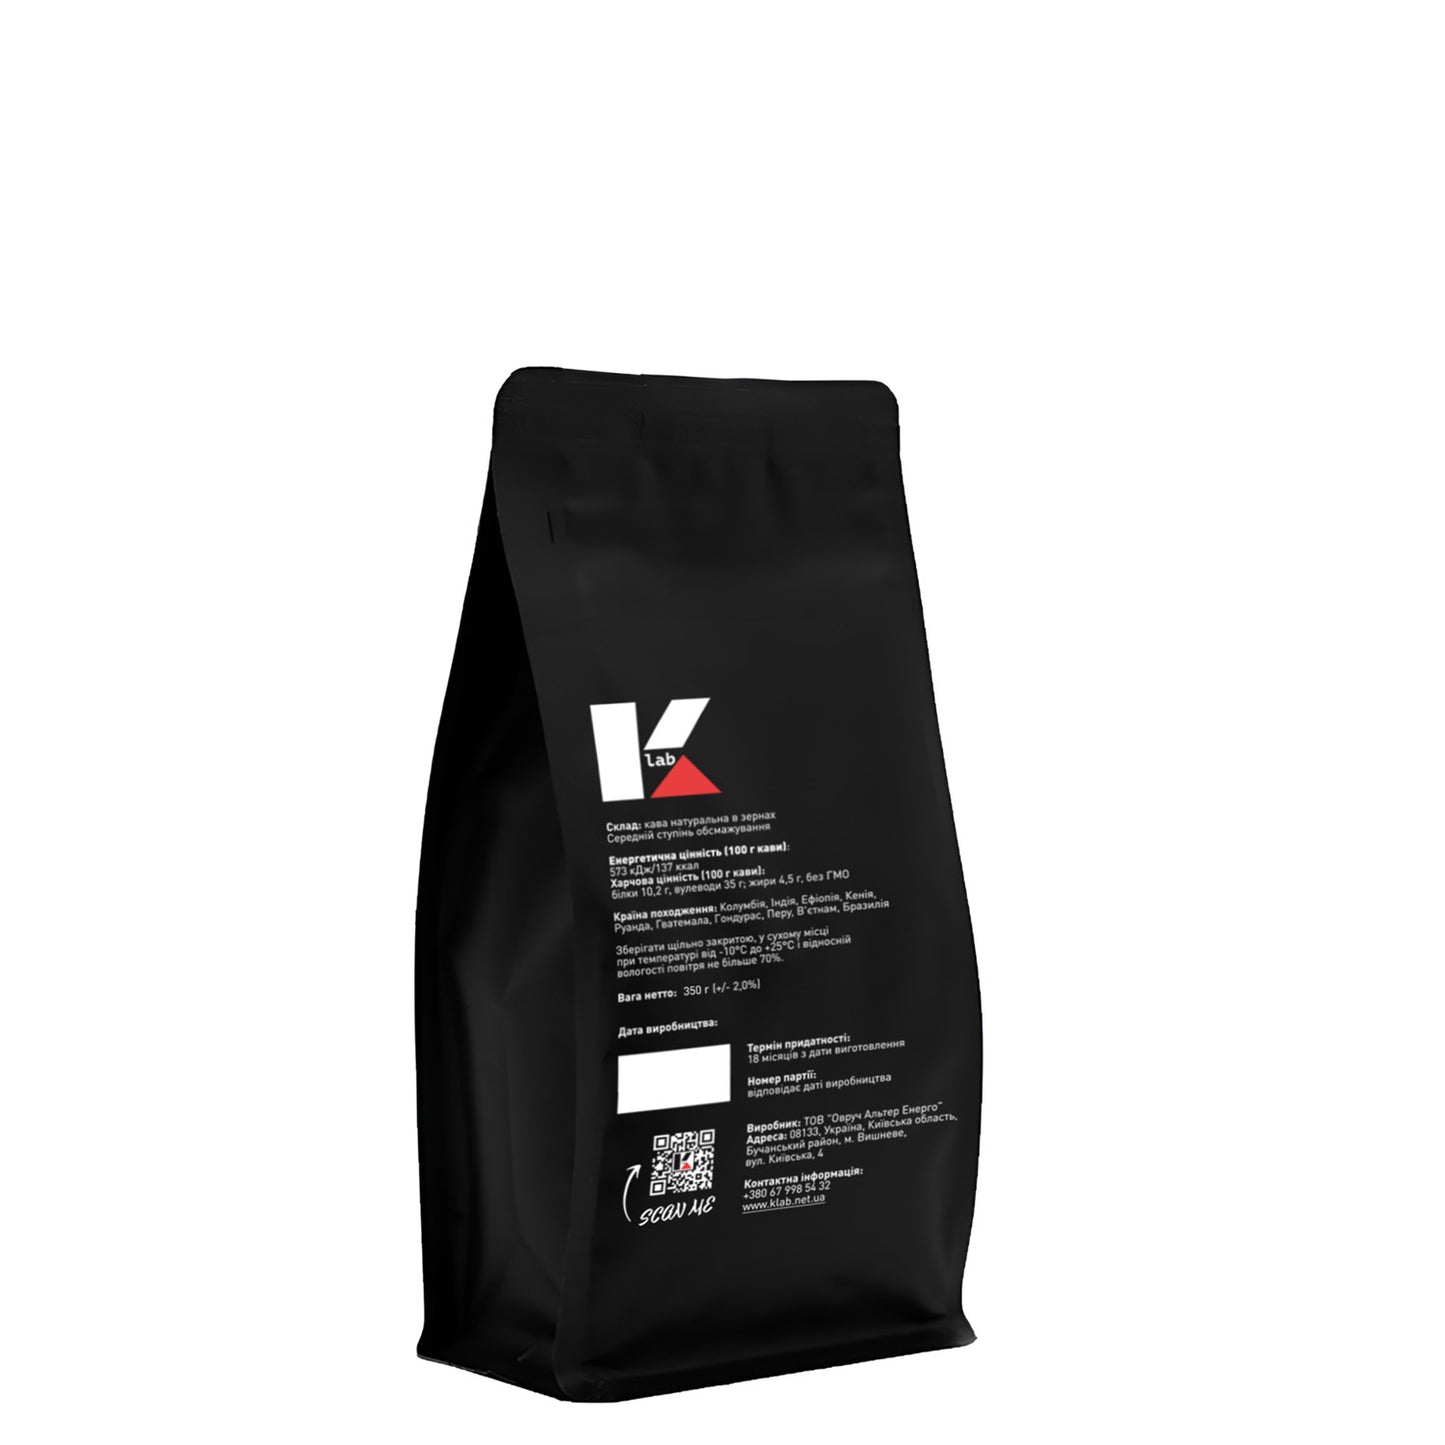 COFFEE STORY №6 - Klab (0.35kg back)